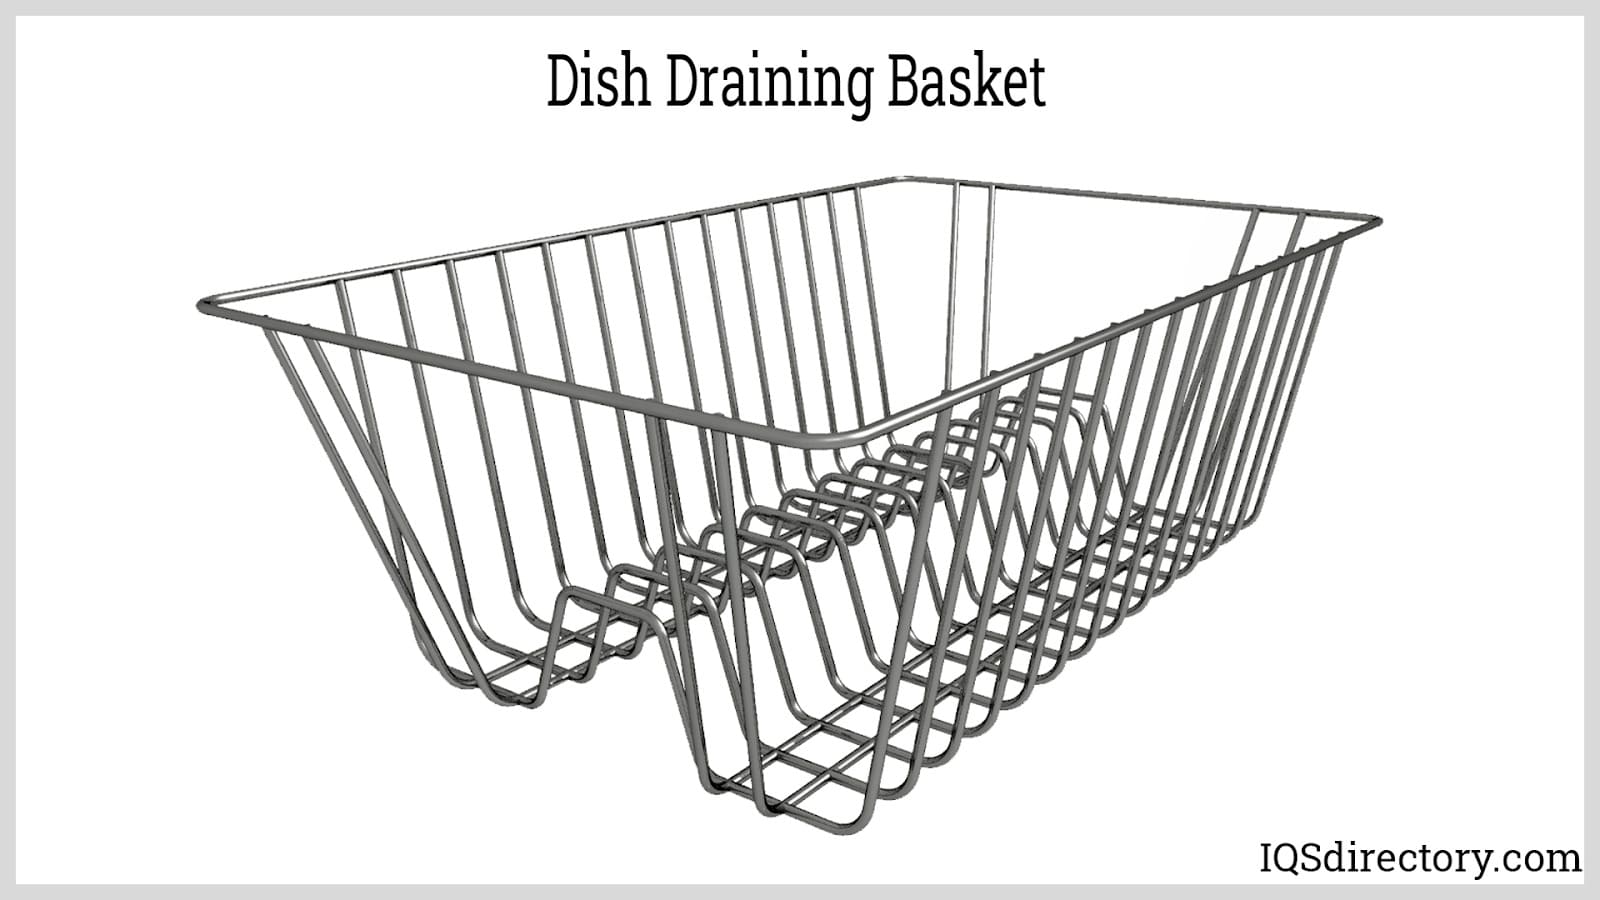 Dish Draining Basket